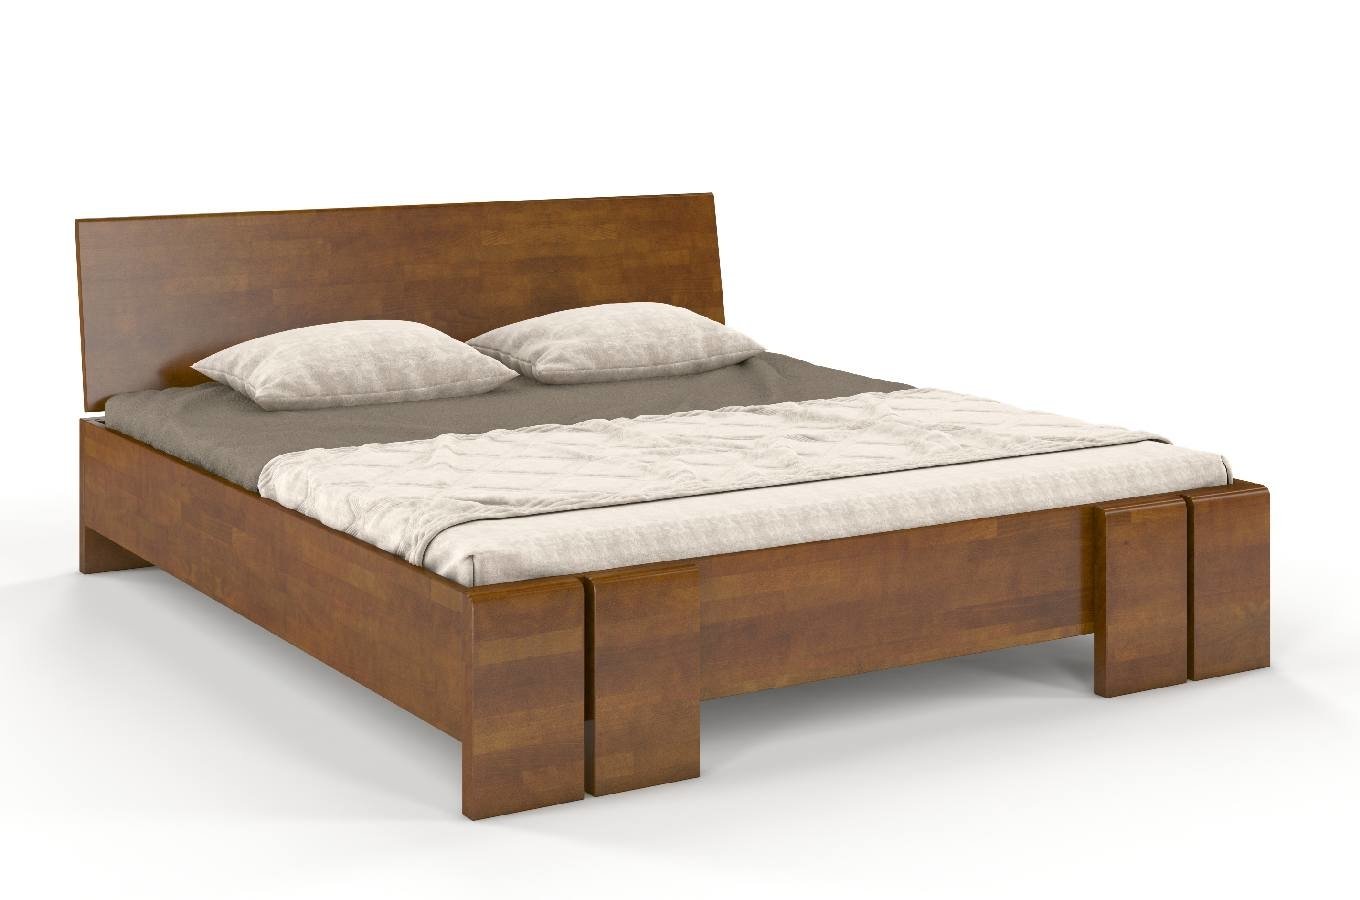 Łóżko drewniane bukowe Skandica VESTRE Maxi & Long / 140x220 cm, kolor orzech